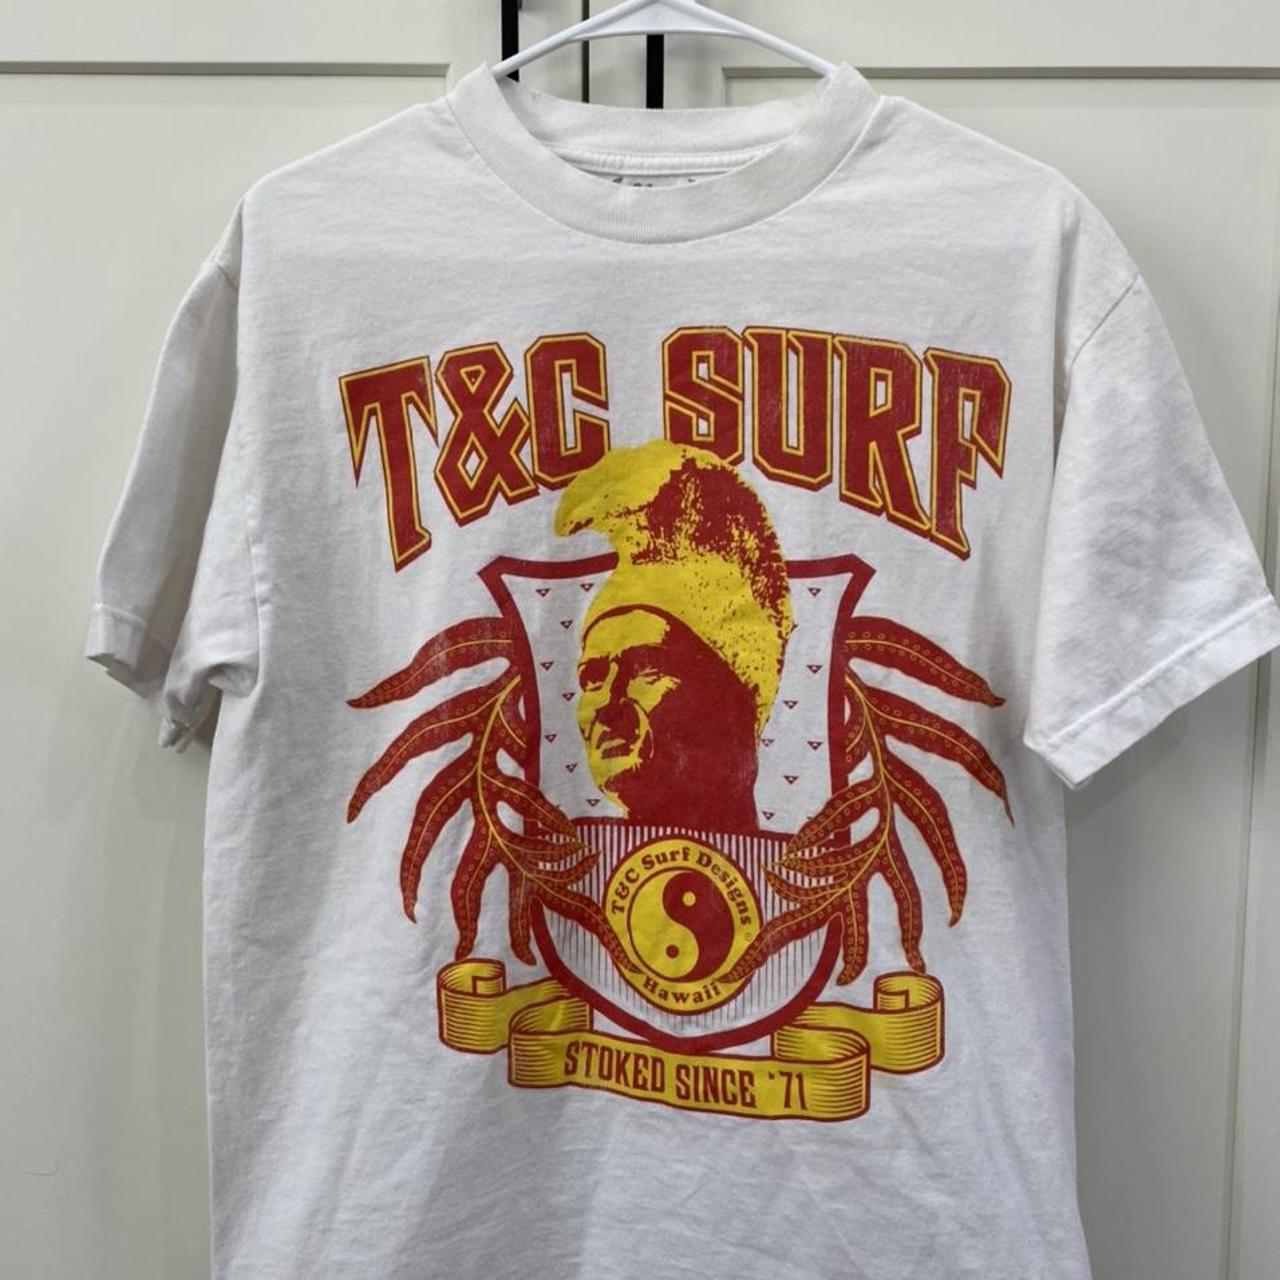 T&C surf t shirt. Size medium. #trojans #usc #surf... - Depop